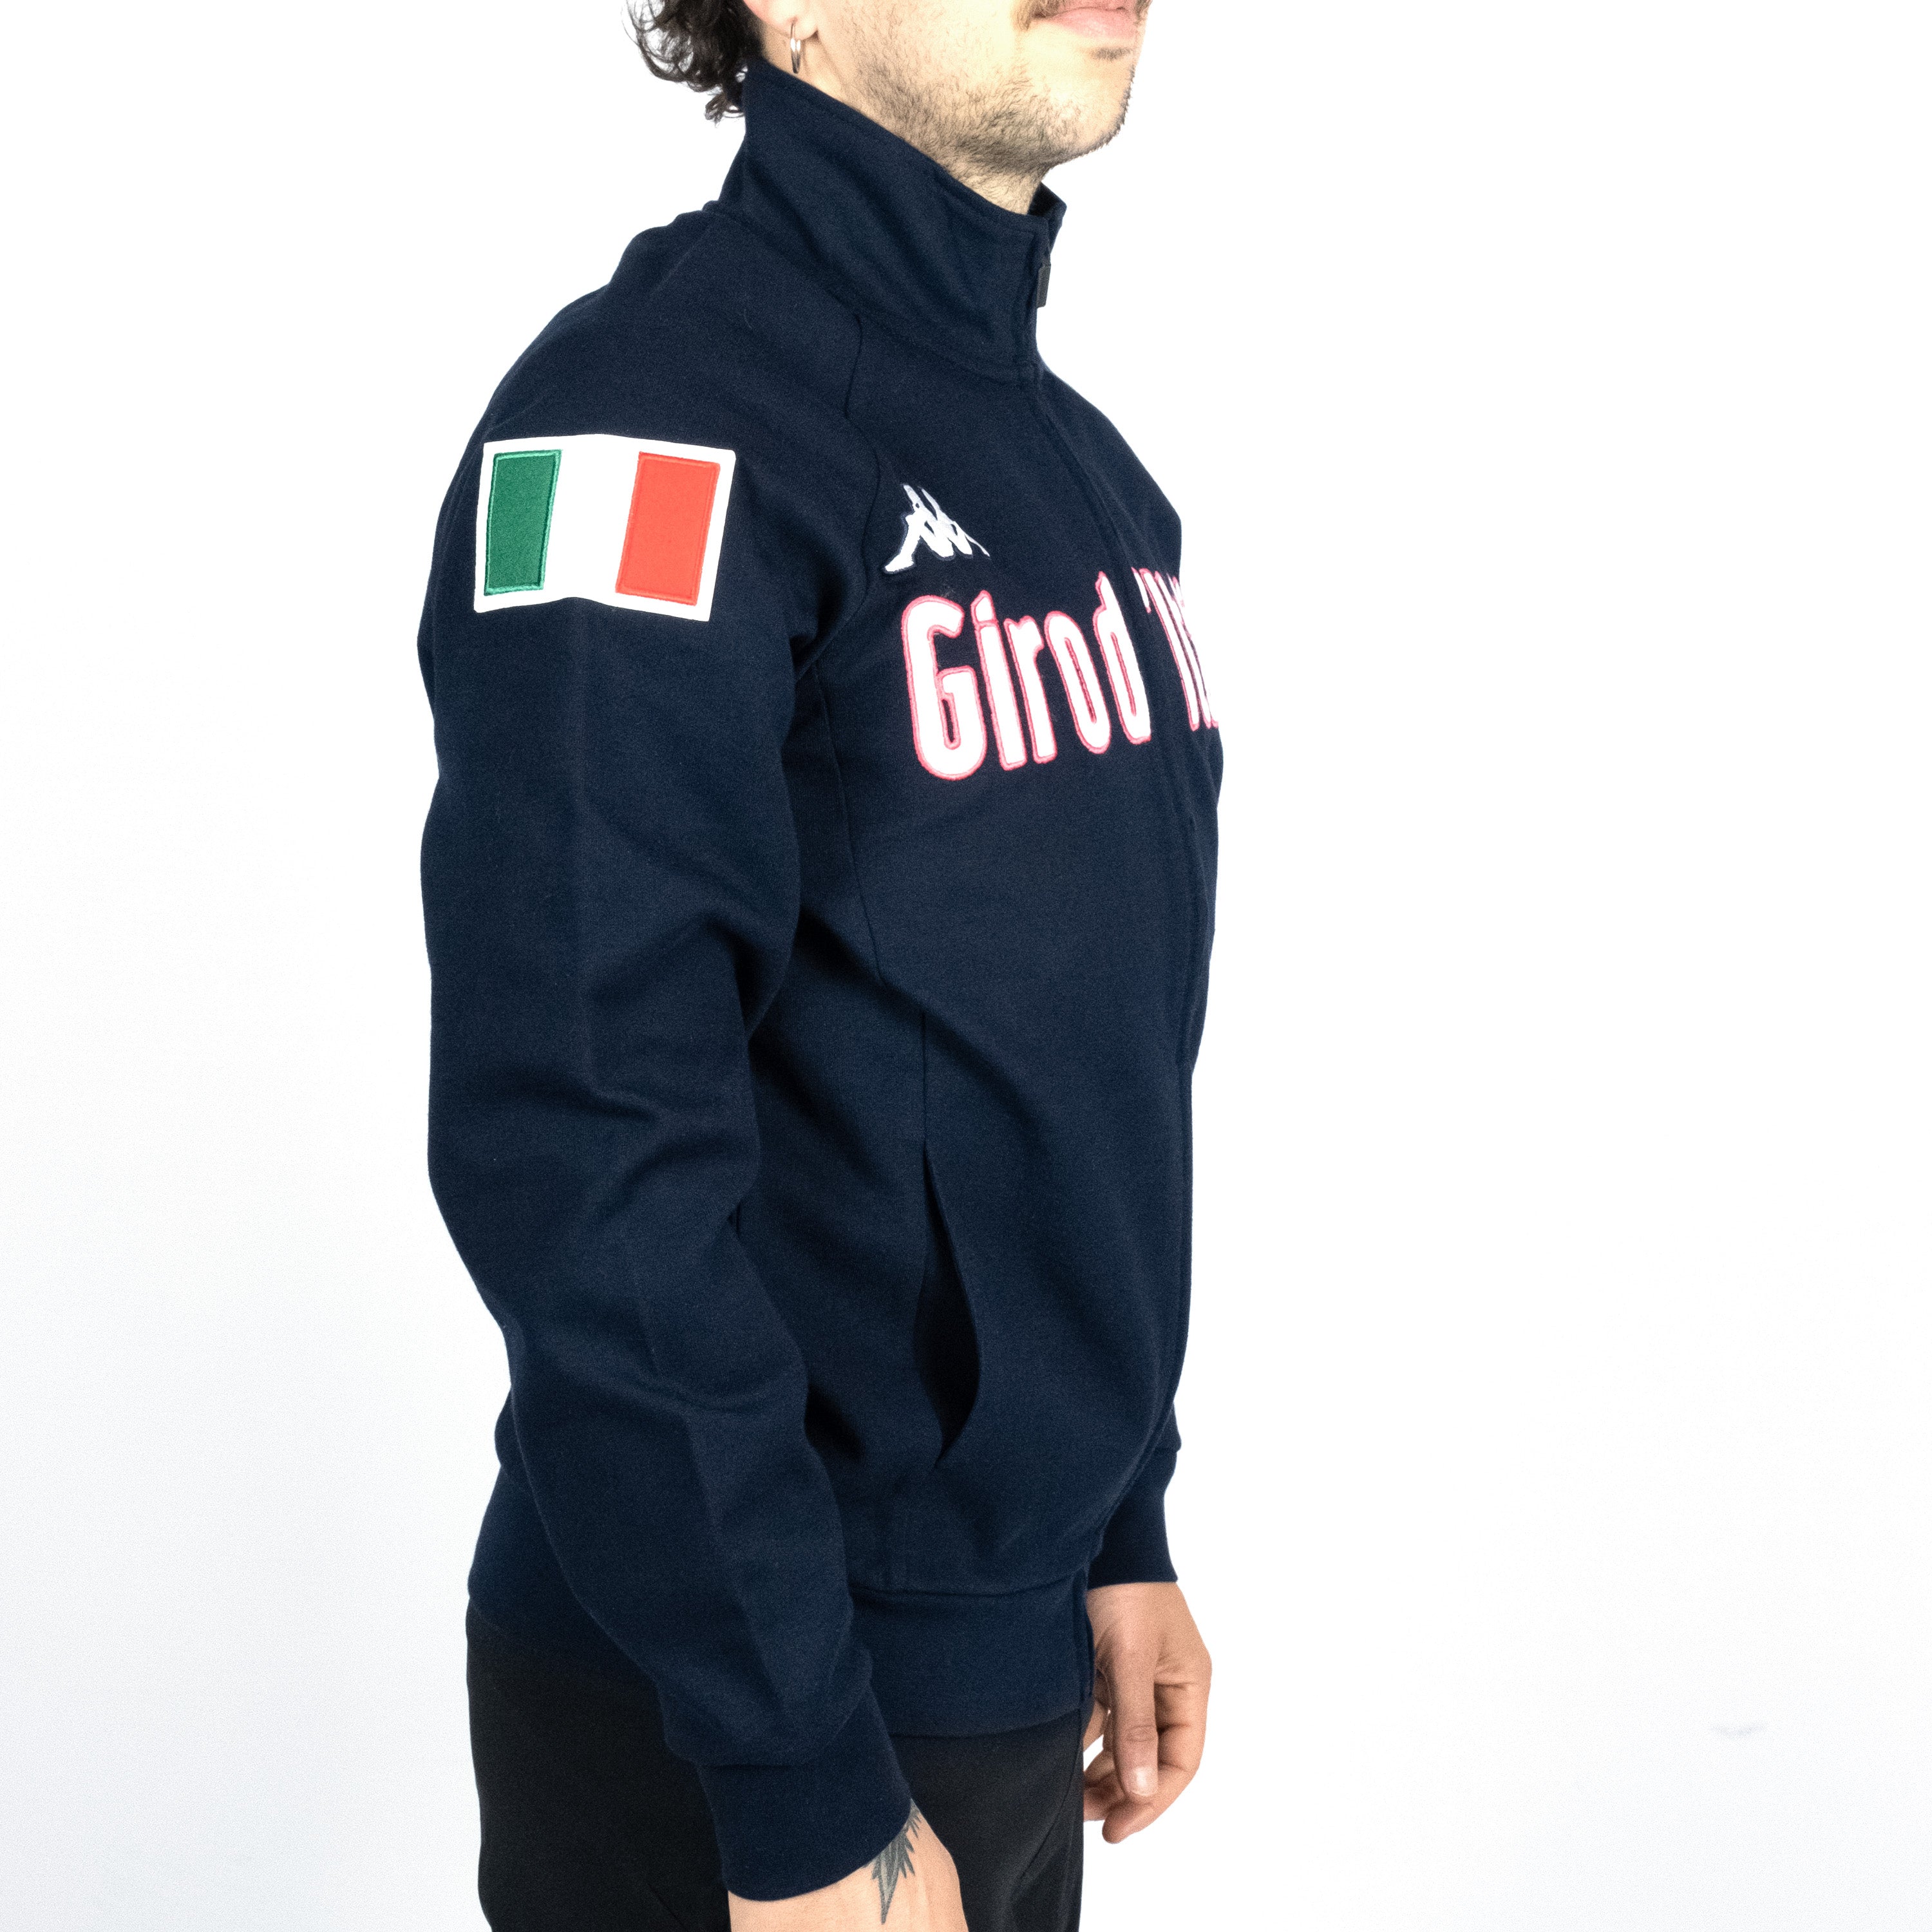 Sweatshirt Giro d'Italia - Blue